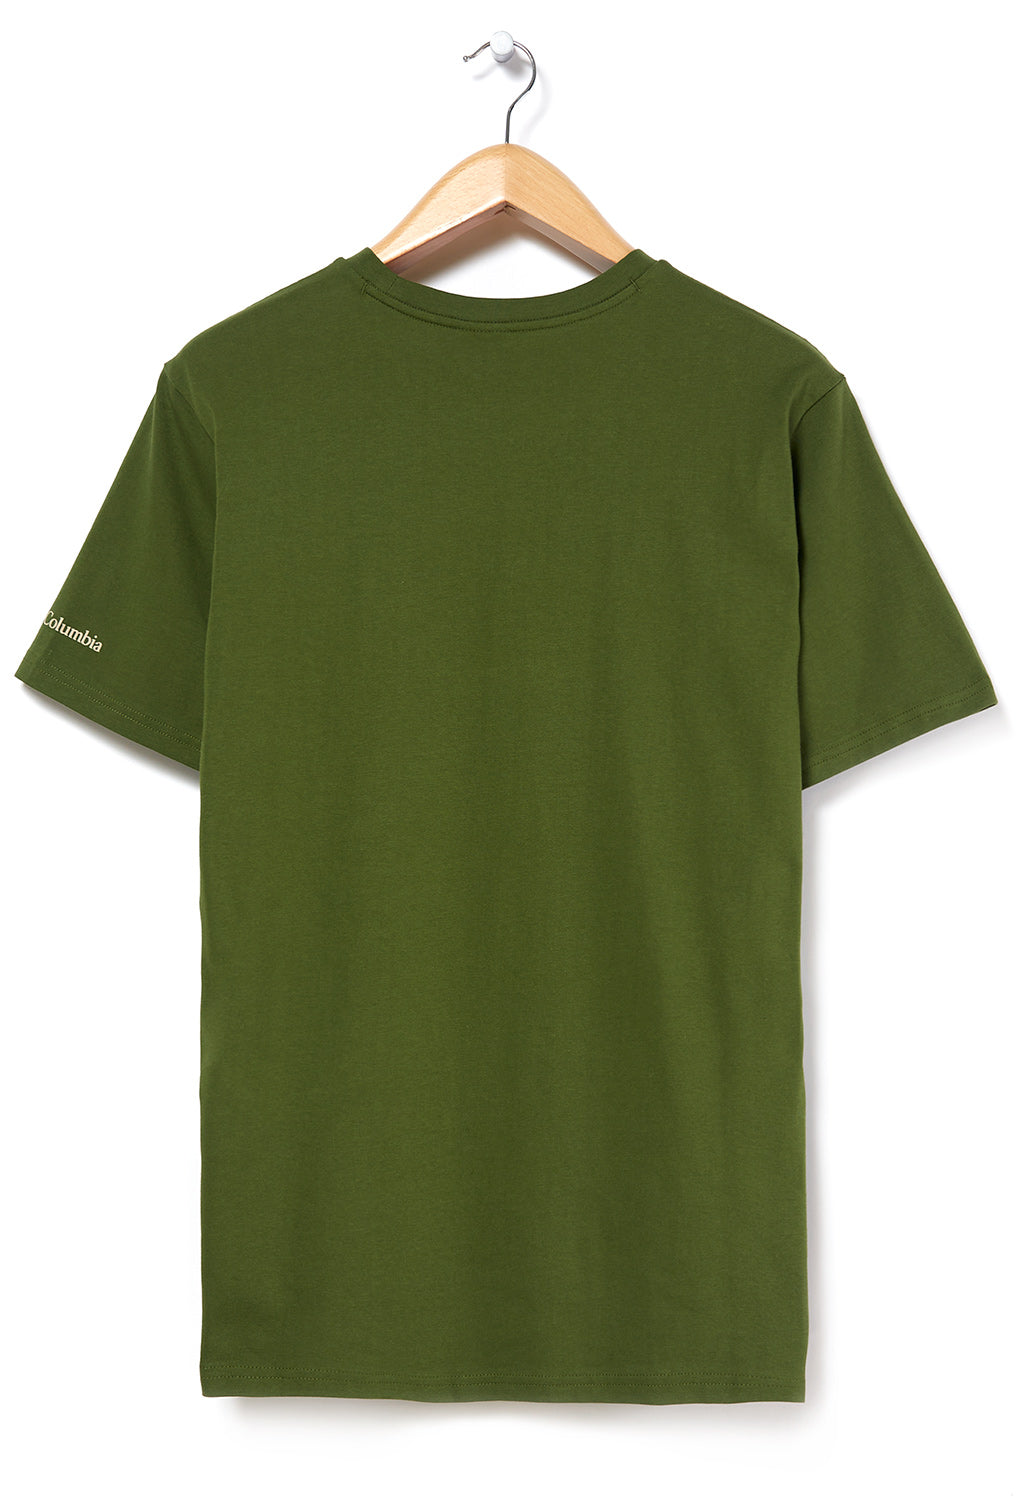 Columbia Men's Deschutes Valley Graphic T-Shirt - Pesto